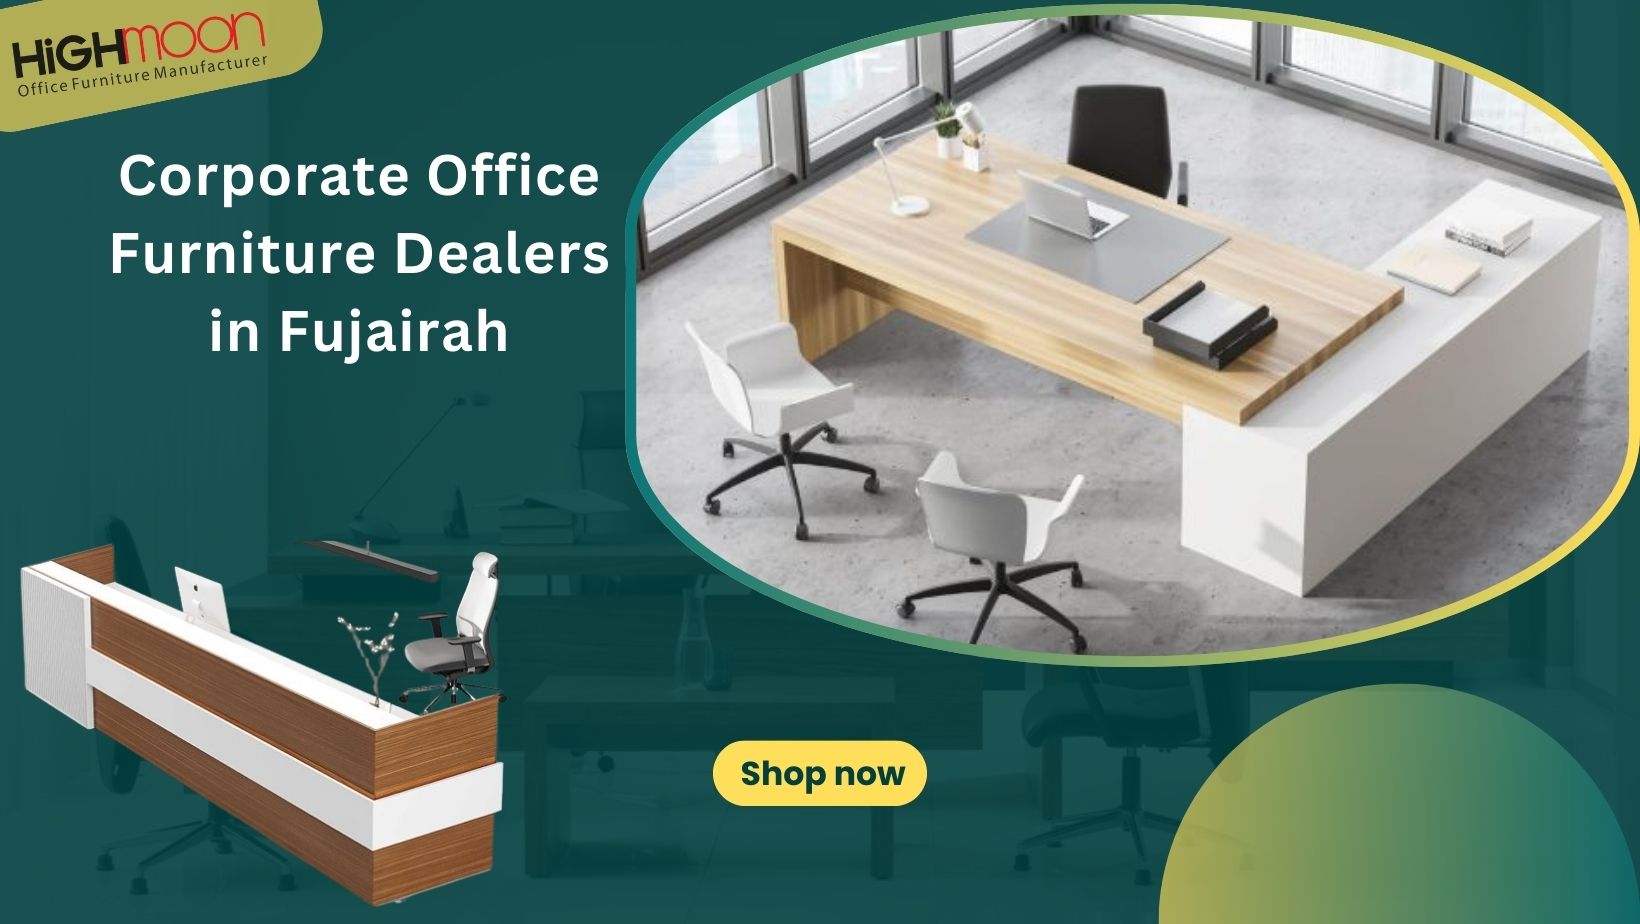 Corporate Office Furniture Dealers in Fujairah